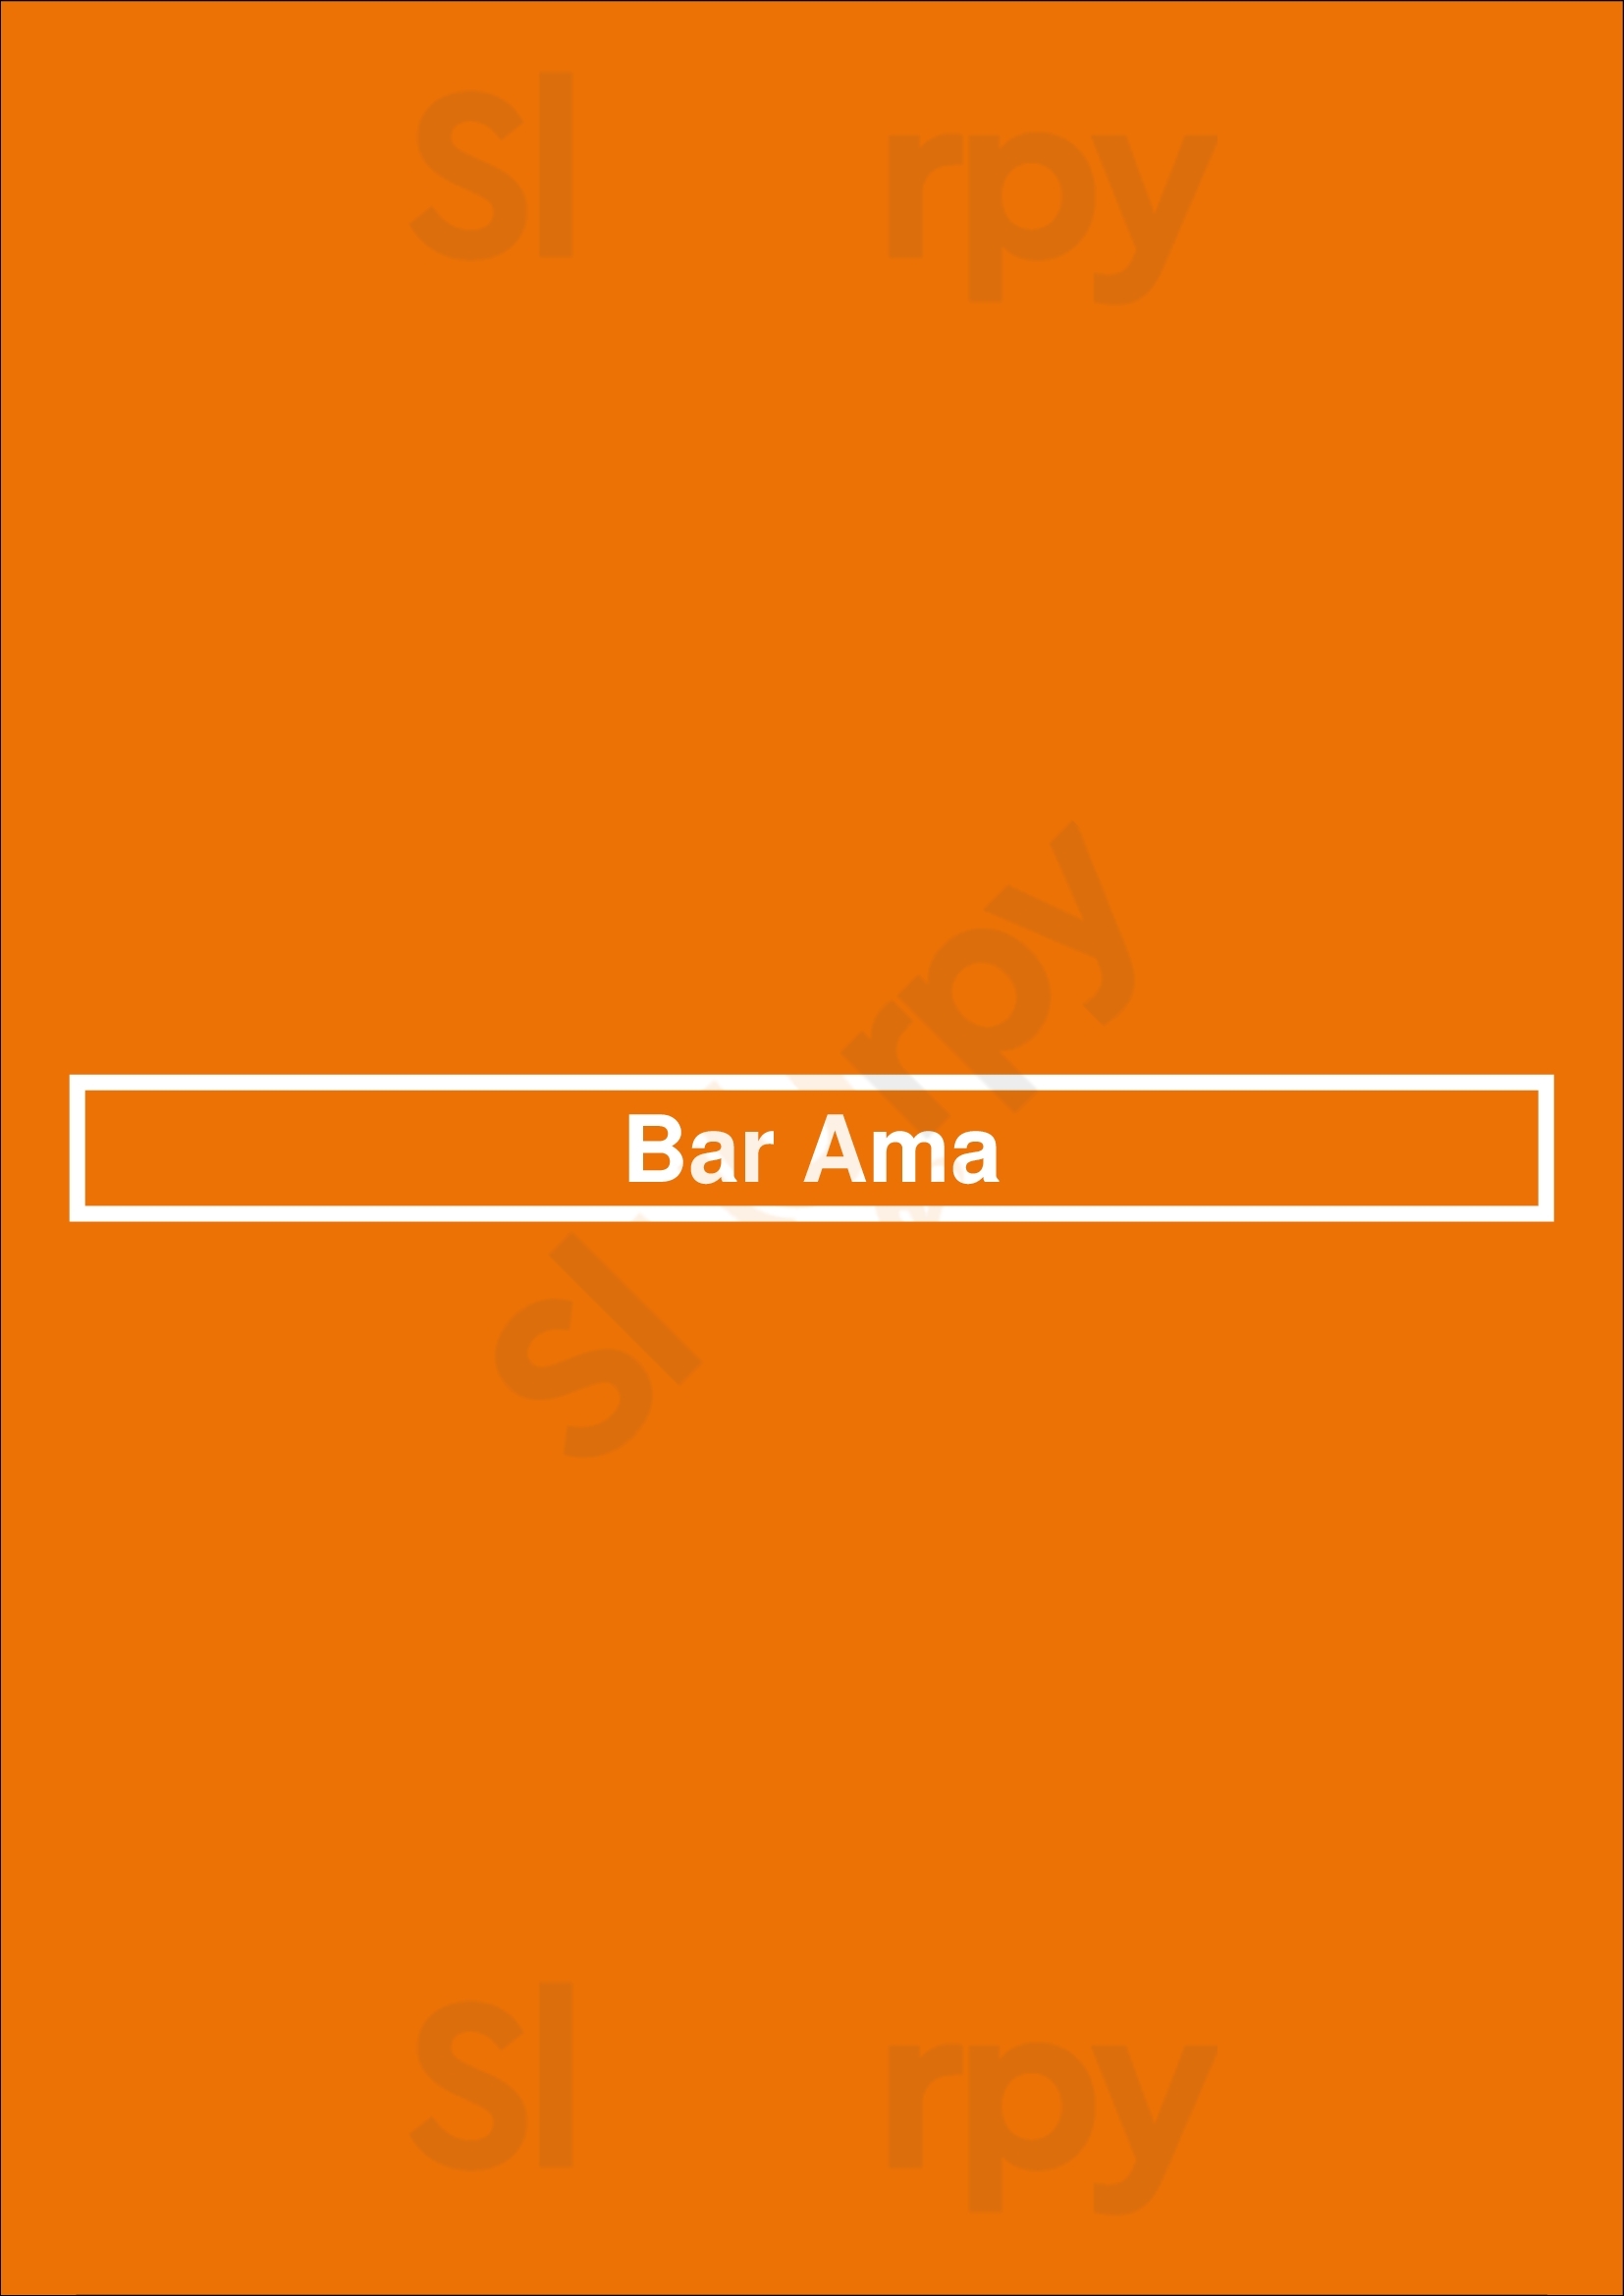 Bar Ama Los Angeles Menu - 1